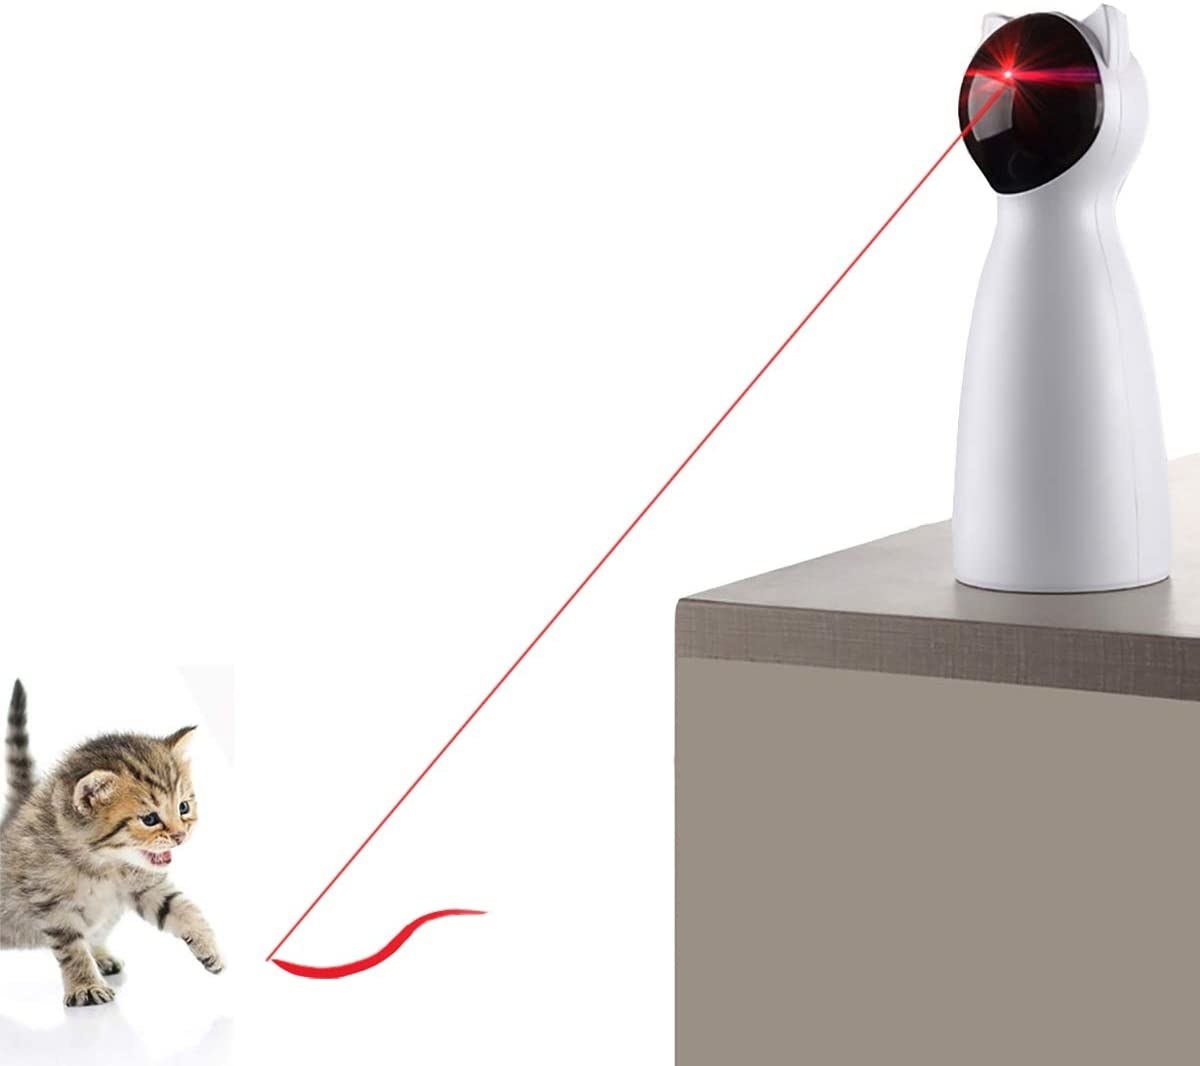 Kitten enjoying the laser pointer toy